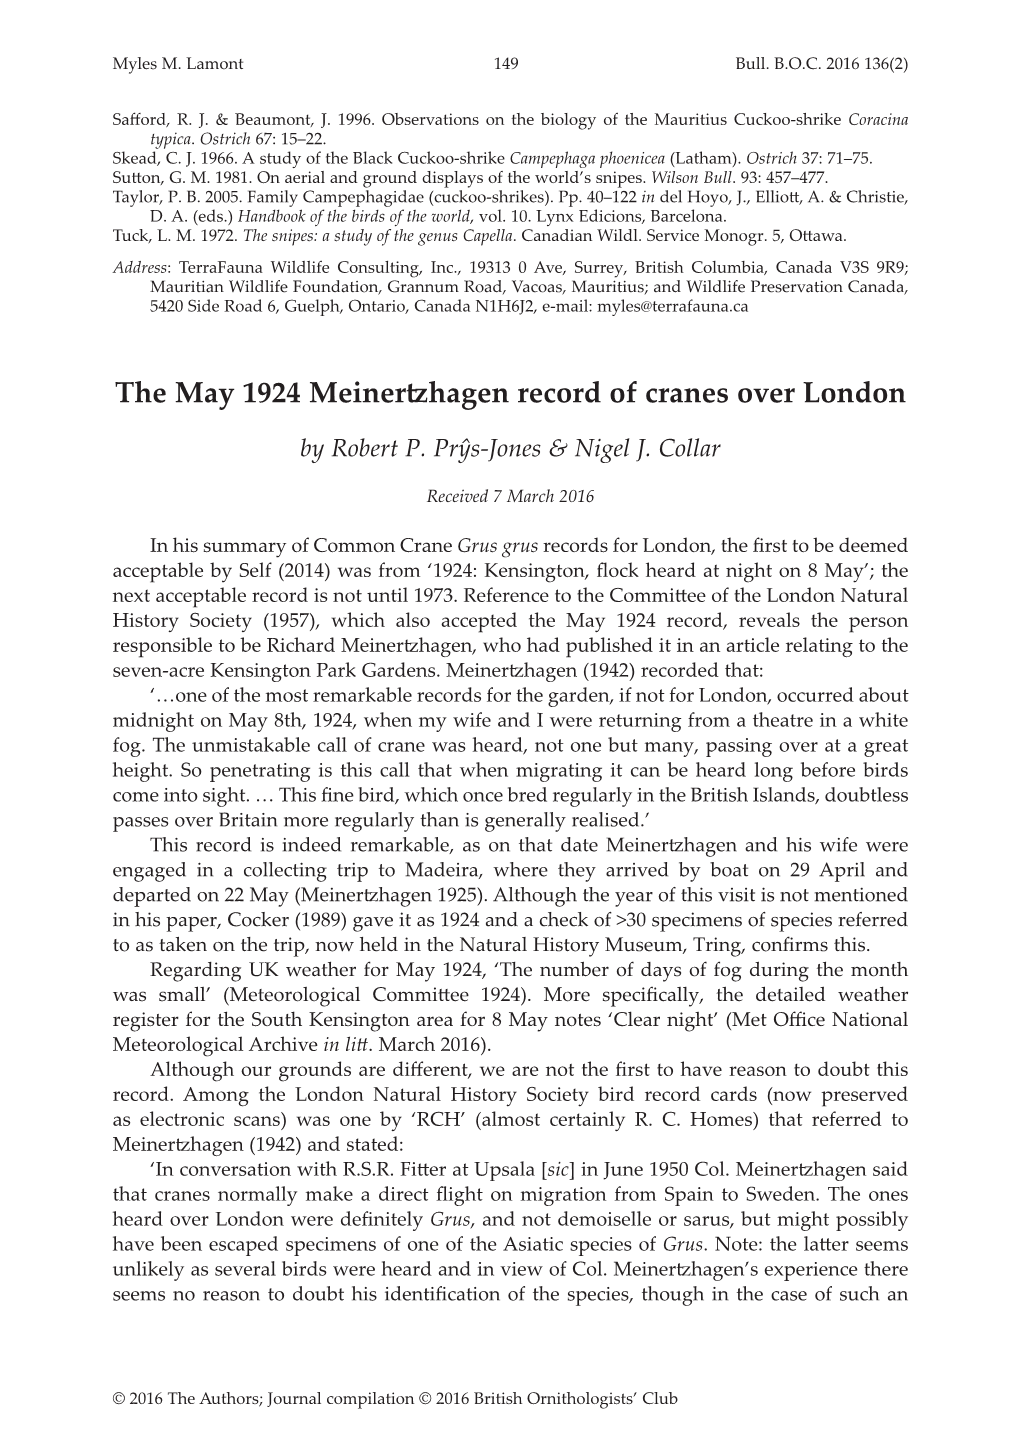 The May 1924 Meinertzhagen Record of Cranes Over London